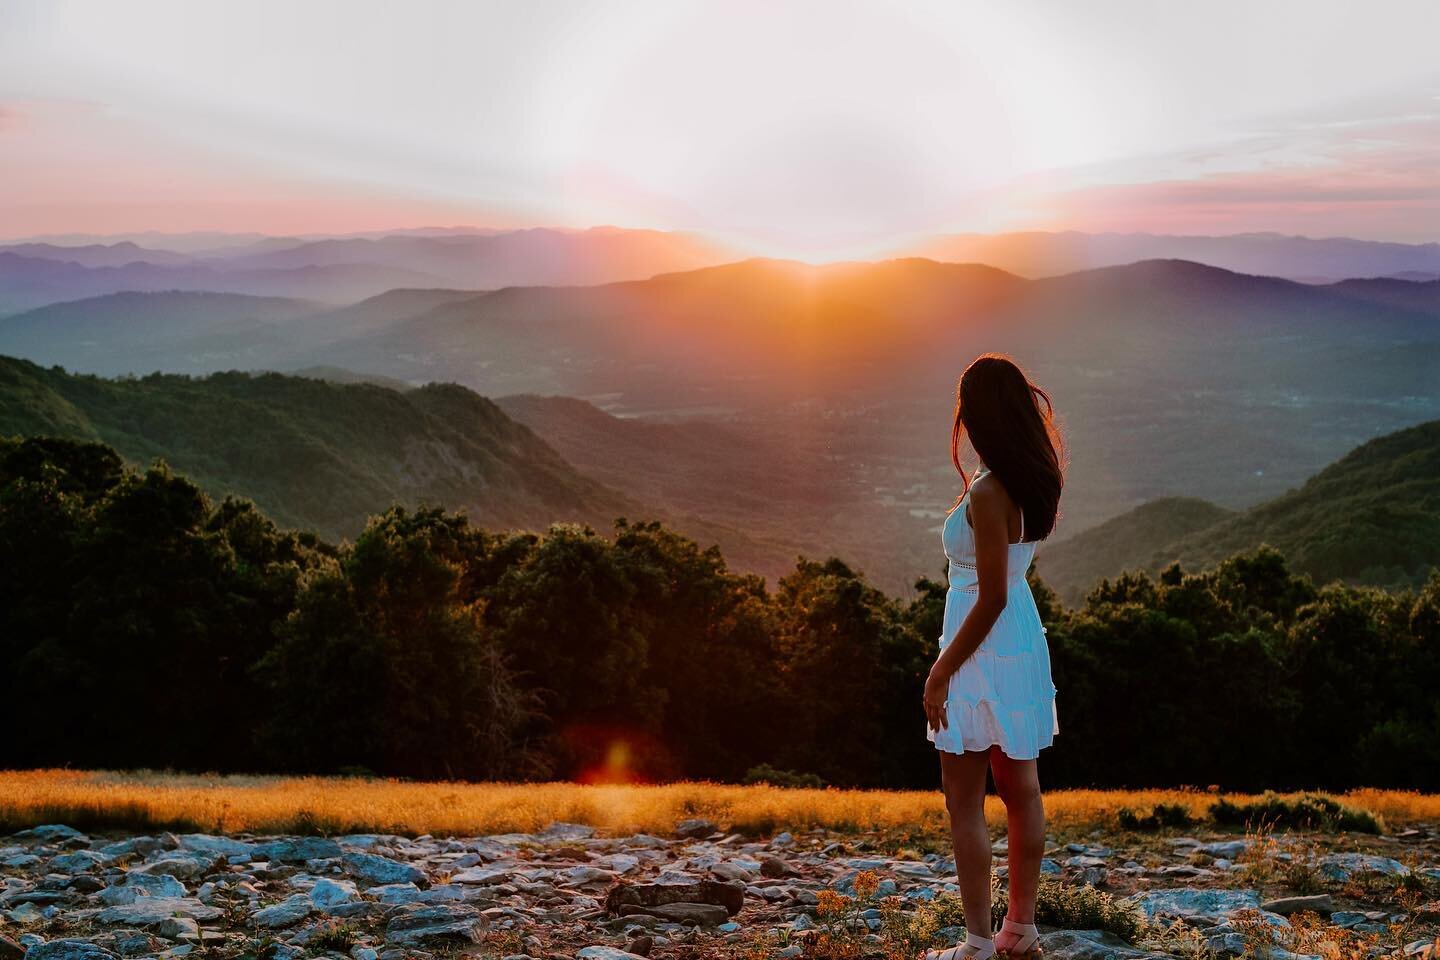 Sunset junkie forever ⚡️😎
.
.
.
.
.
#ashevillephotographer #sunsetjunkie #blueridgephotographer #hendersonvillephotographer